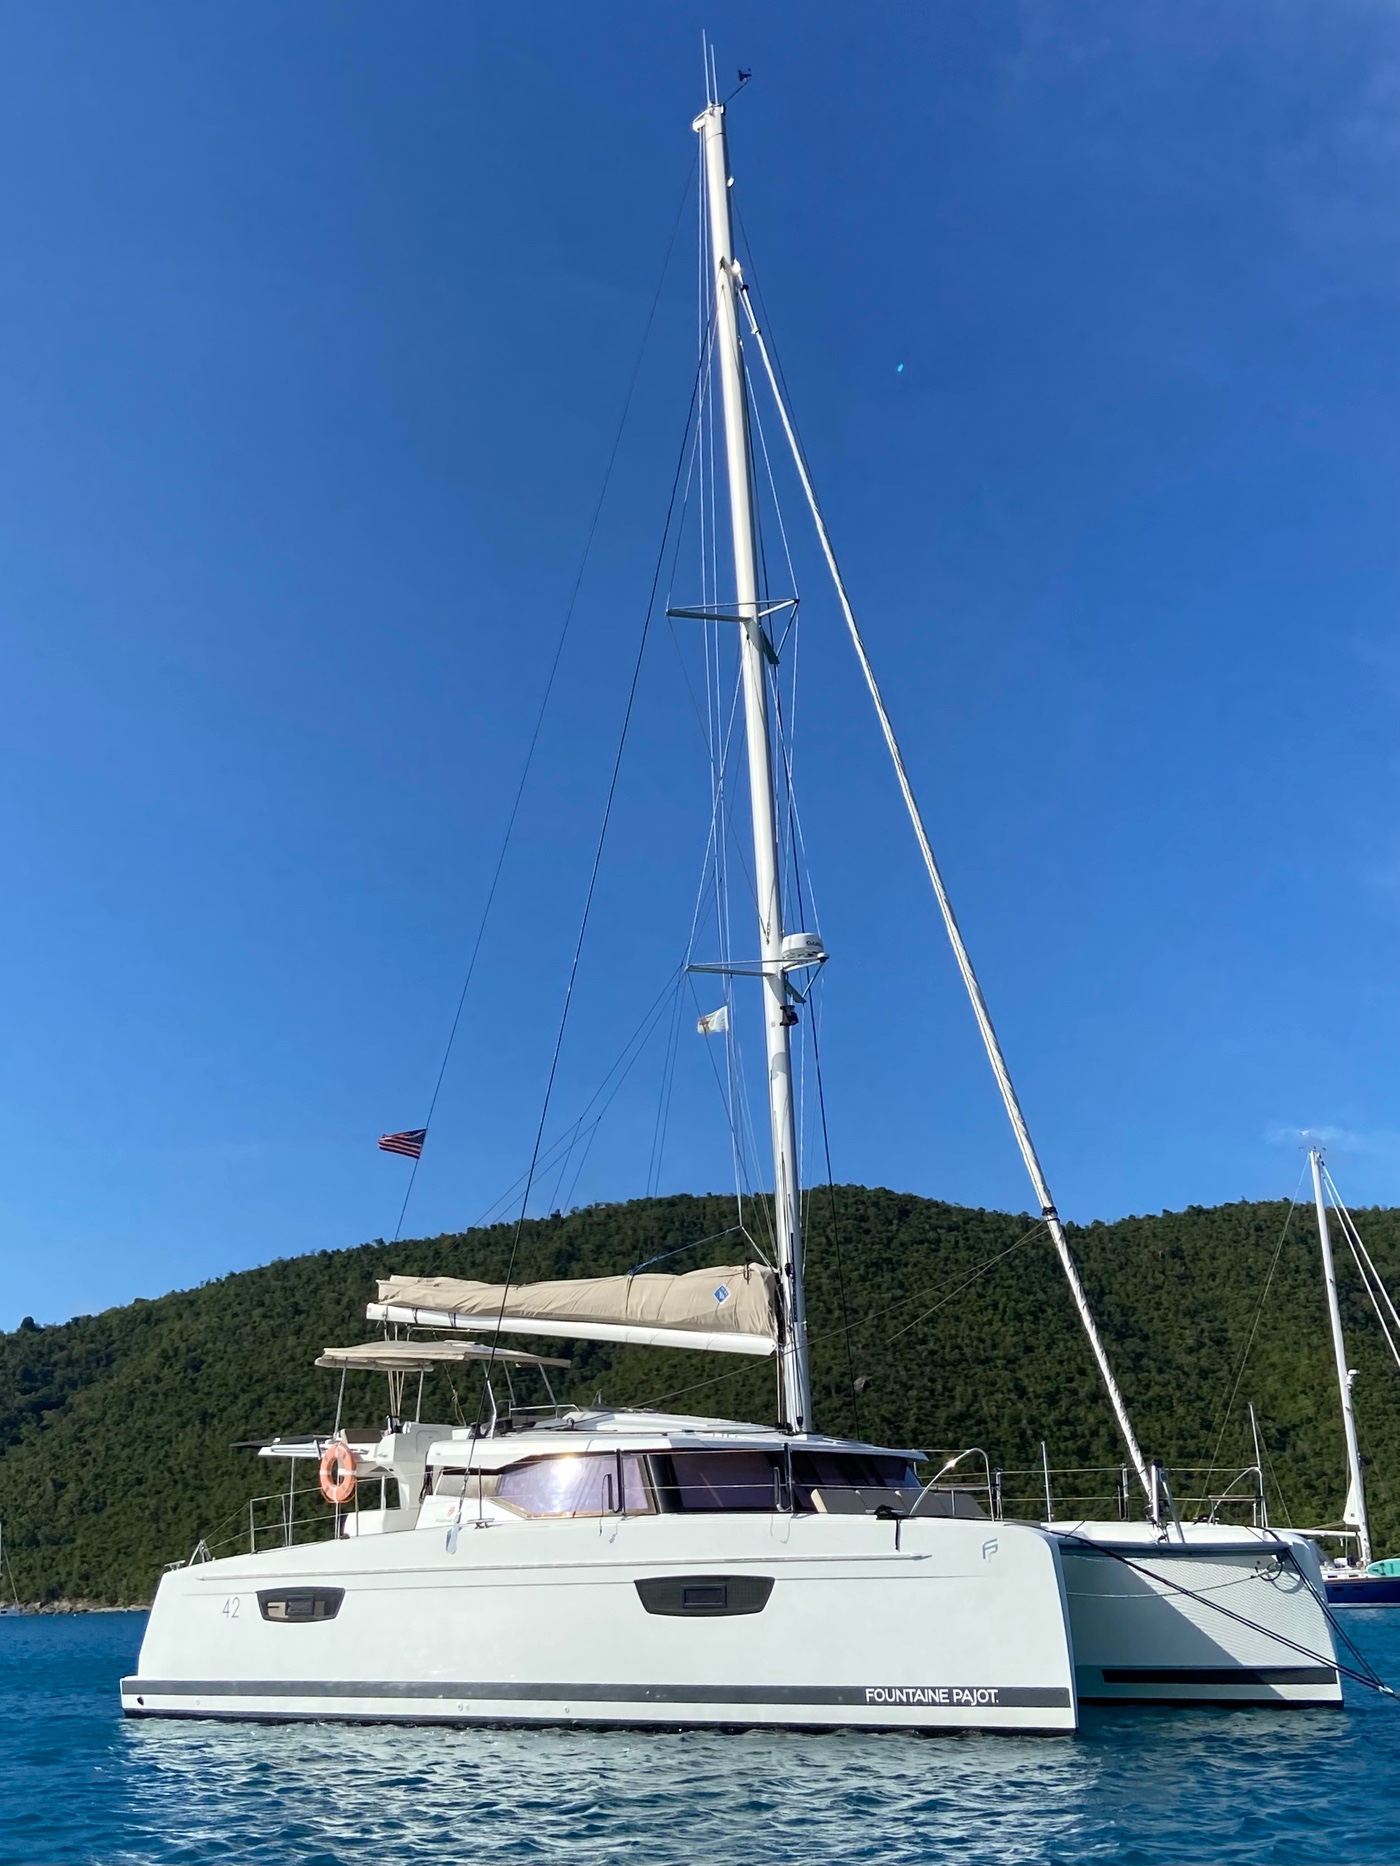 Used Sail Catamaran for Sale 2020 Astrea 42 Additional Information